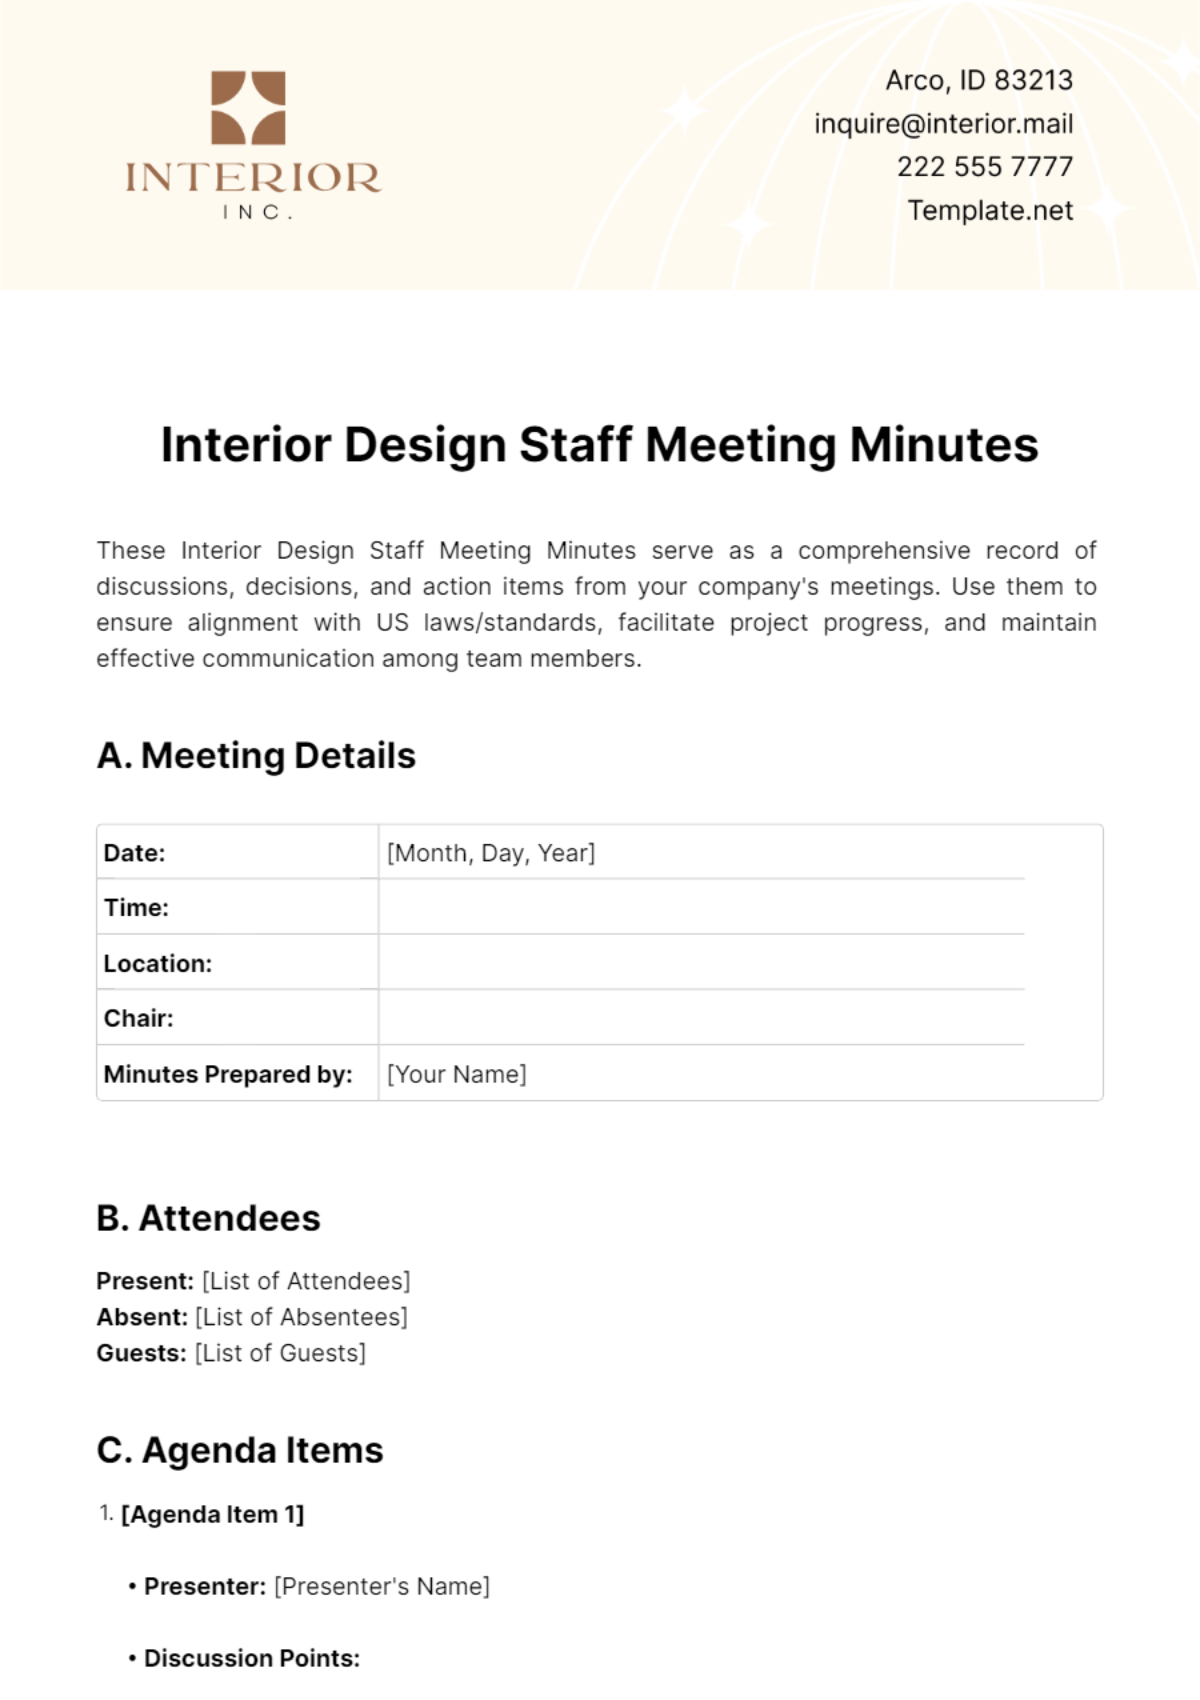 Interior Design Staff Meeting Minutes Template